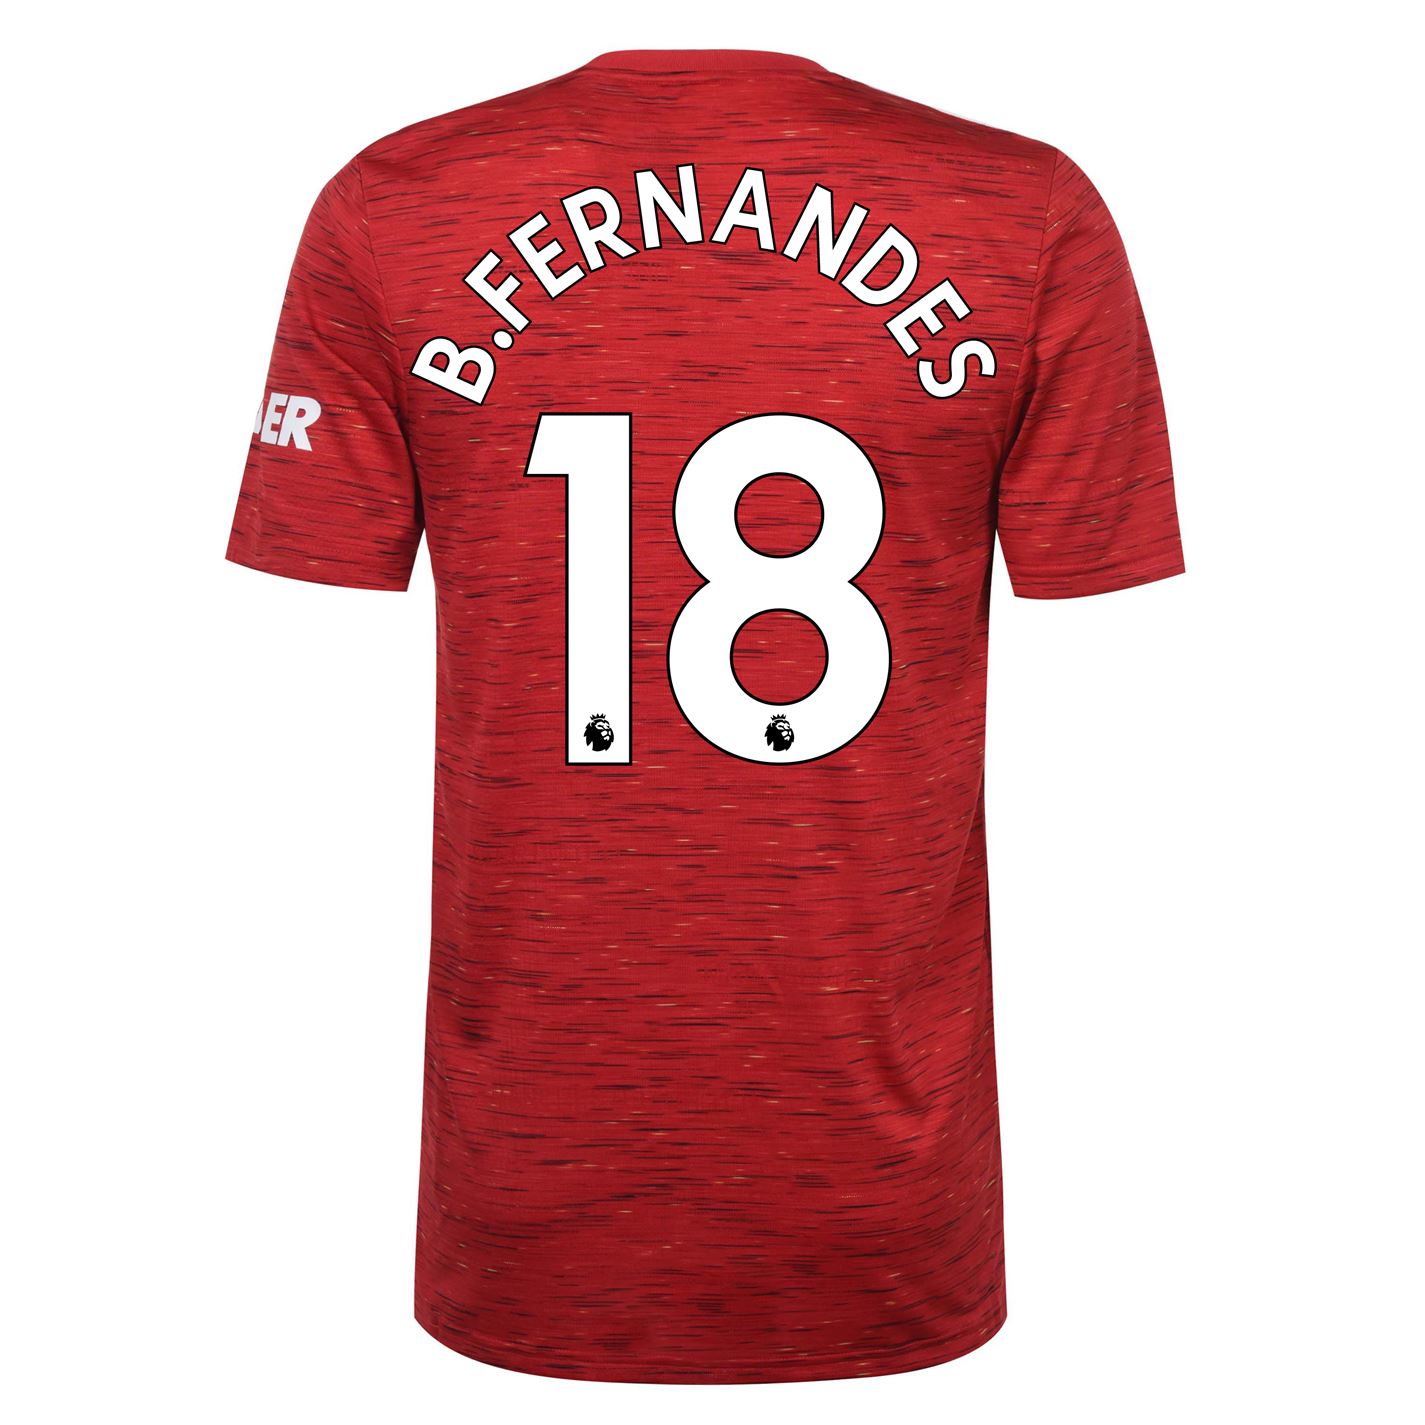 Camasa adidas Manchester United Bruno Fernandes Home 2020 2021